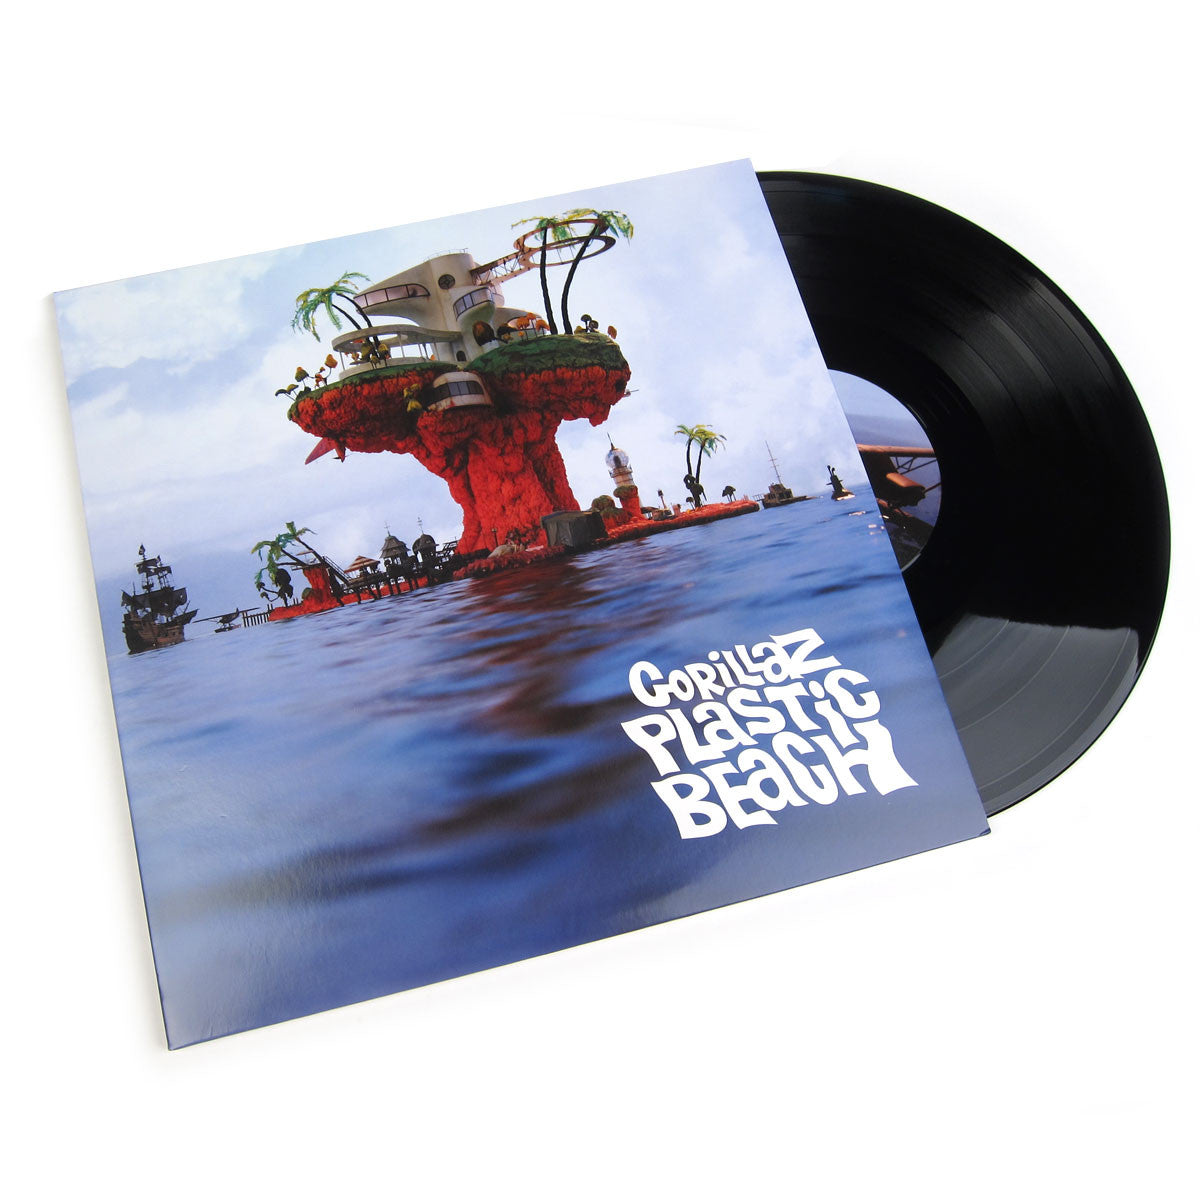 gorillaz plastic beach deluxe vinyl